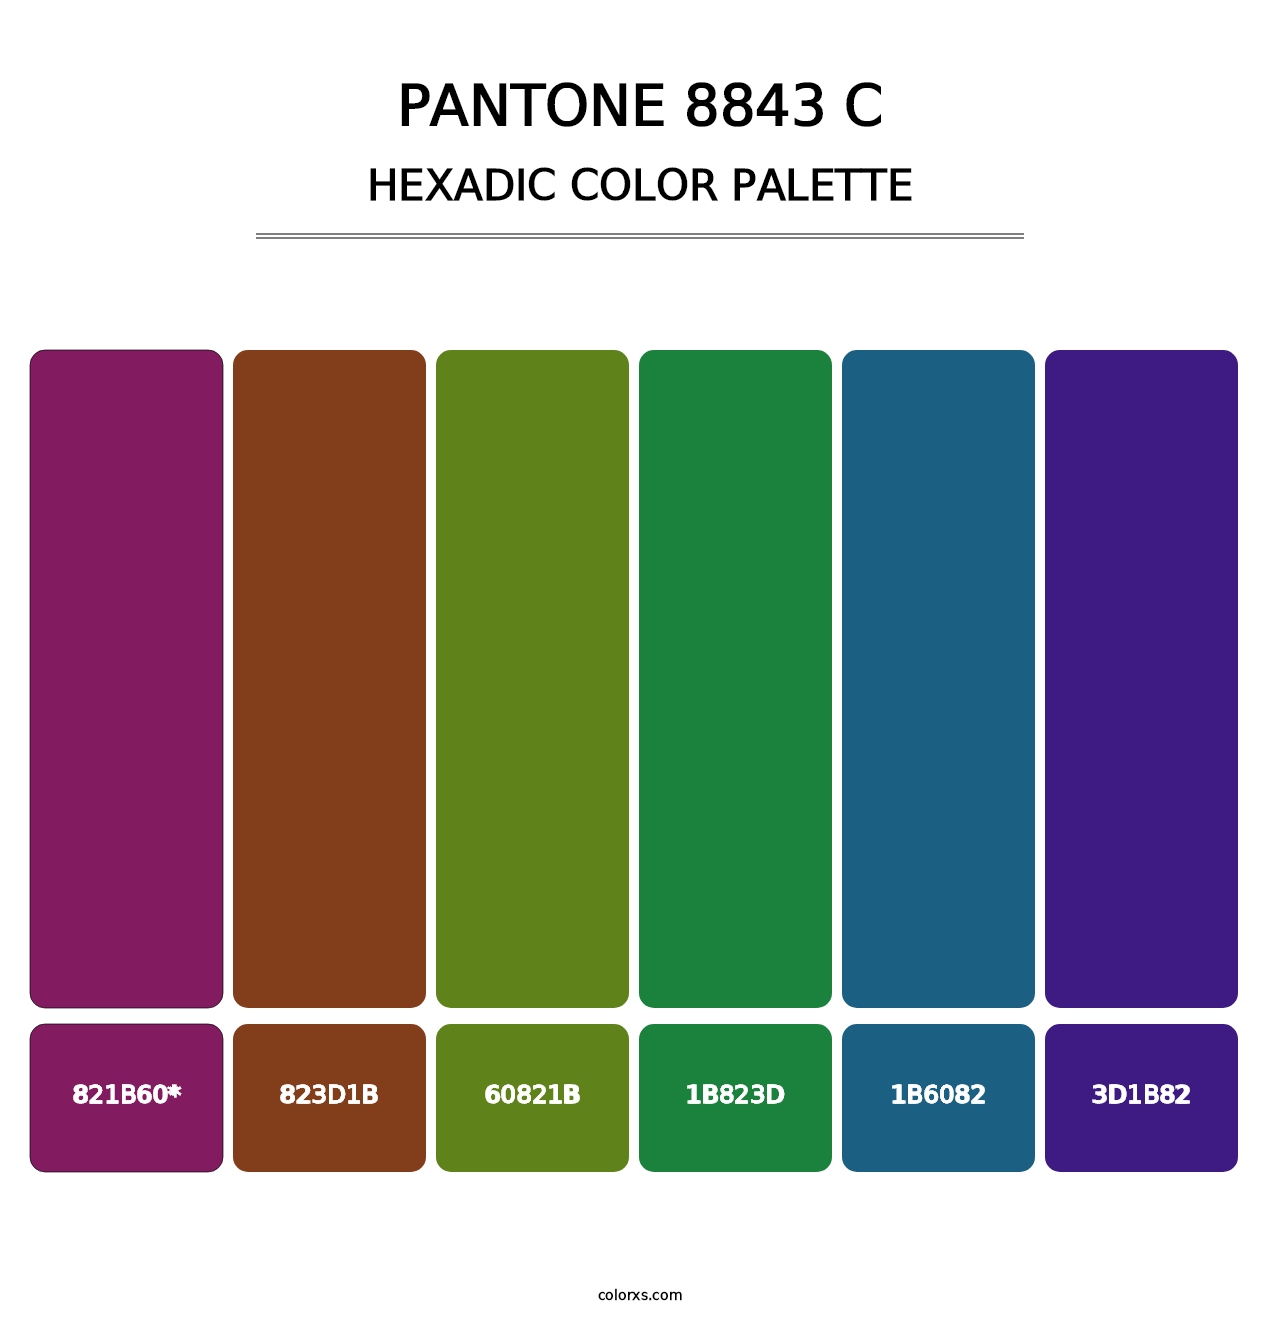 PANTONE 8843 C - Hexadic Color Palette